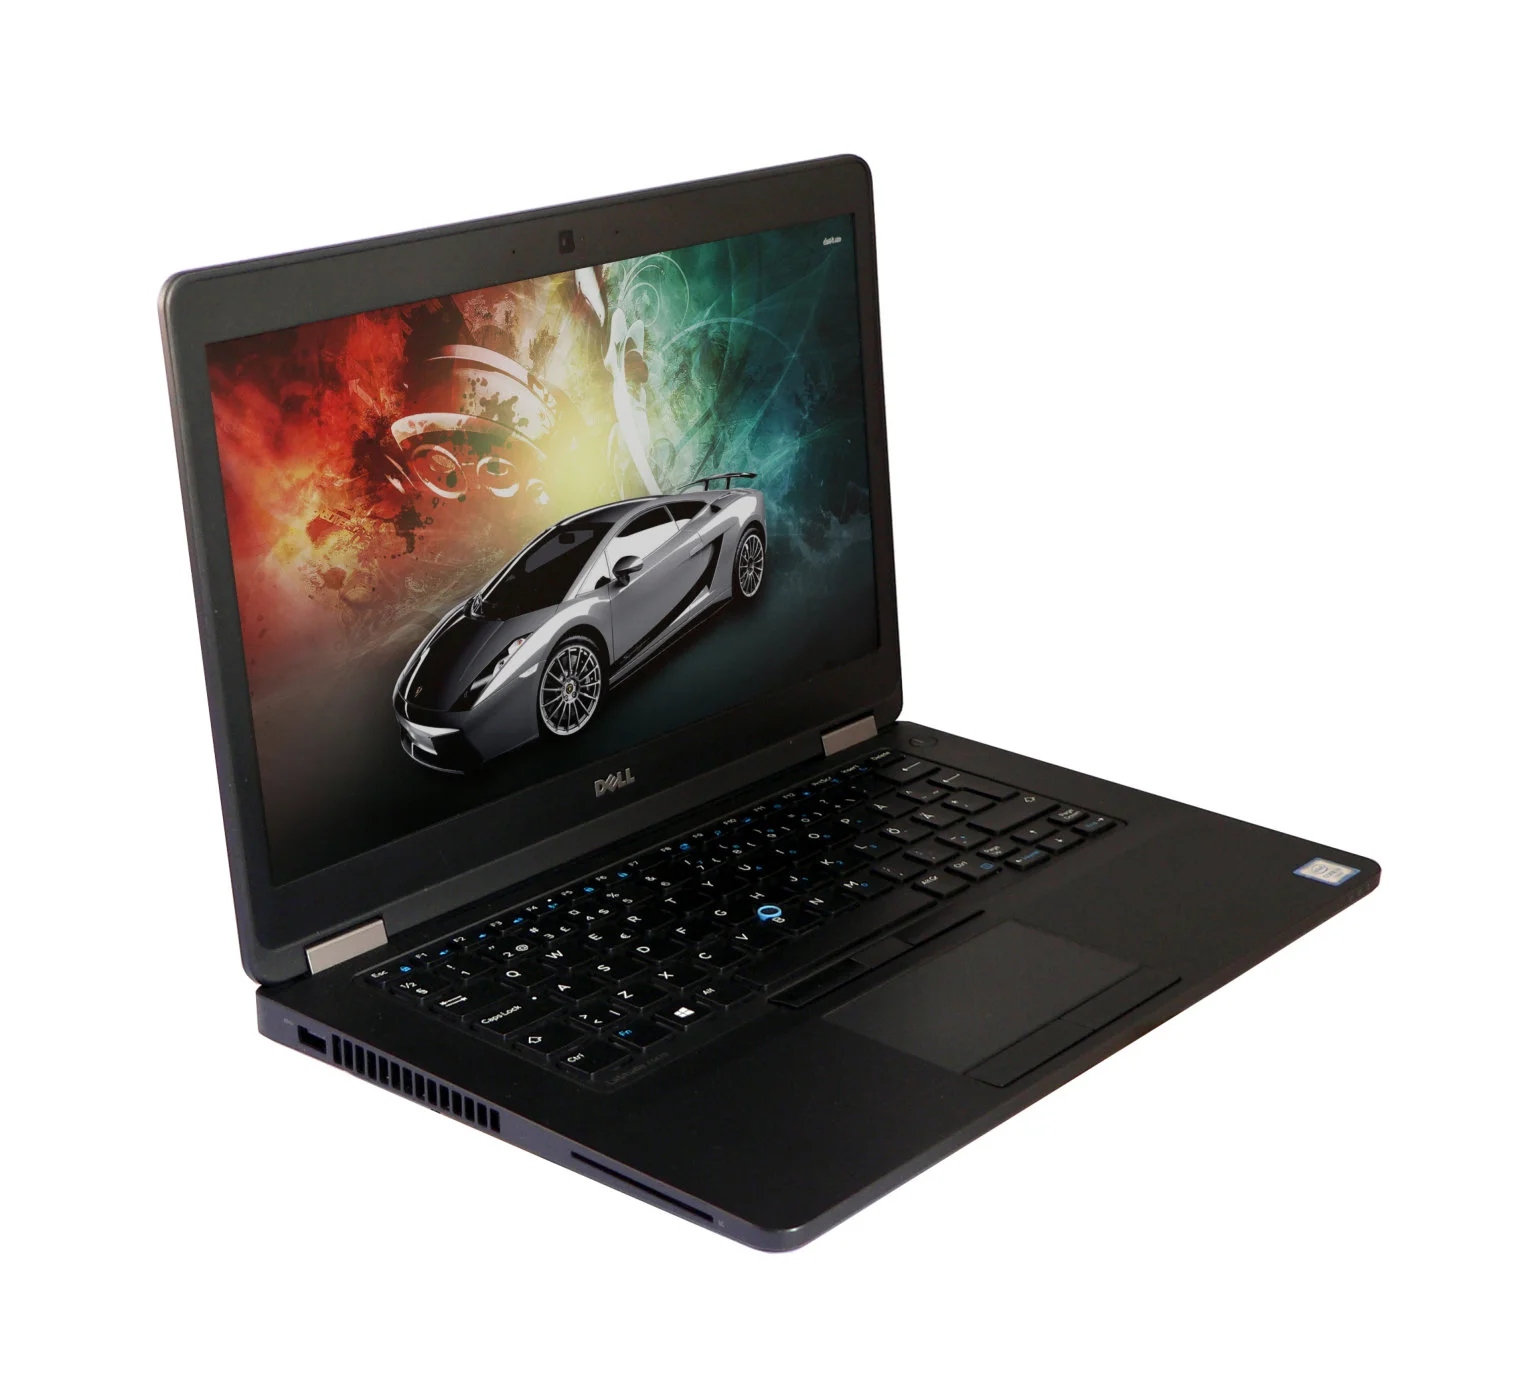 Dell Latitude E5470 Touch használt laptop - Intel Core i5-6300HQ 2,3 GHz, 8 GB RAM, 128 GB SSD, 14,1